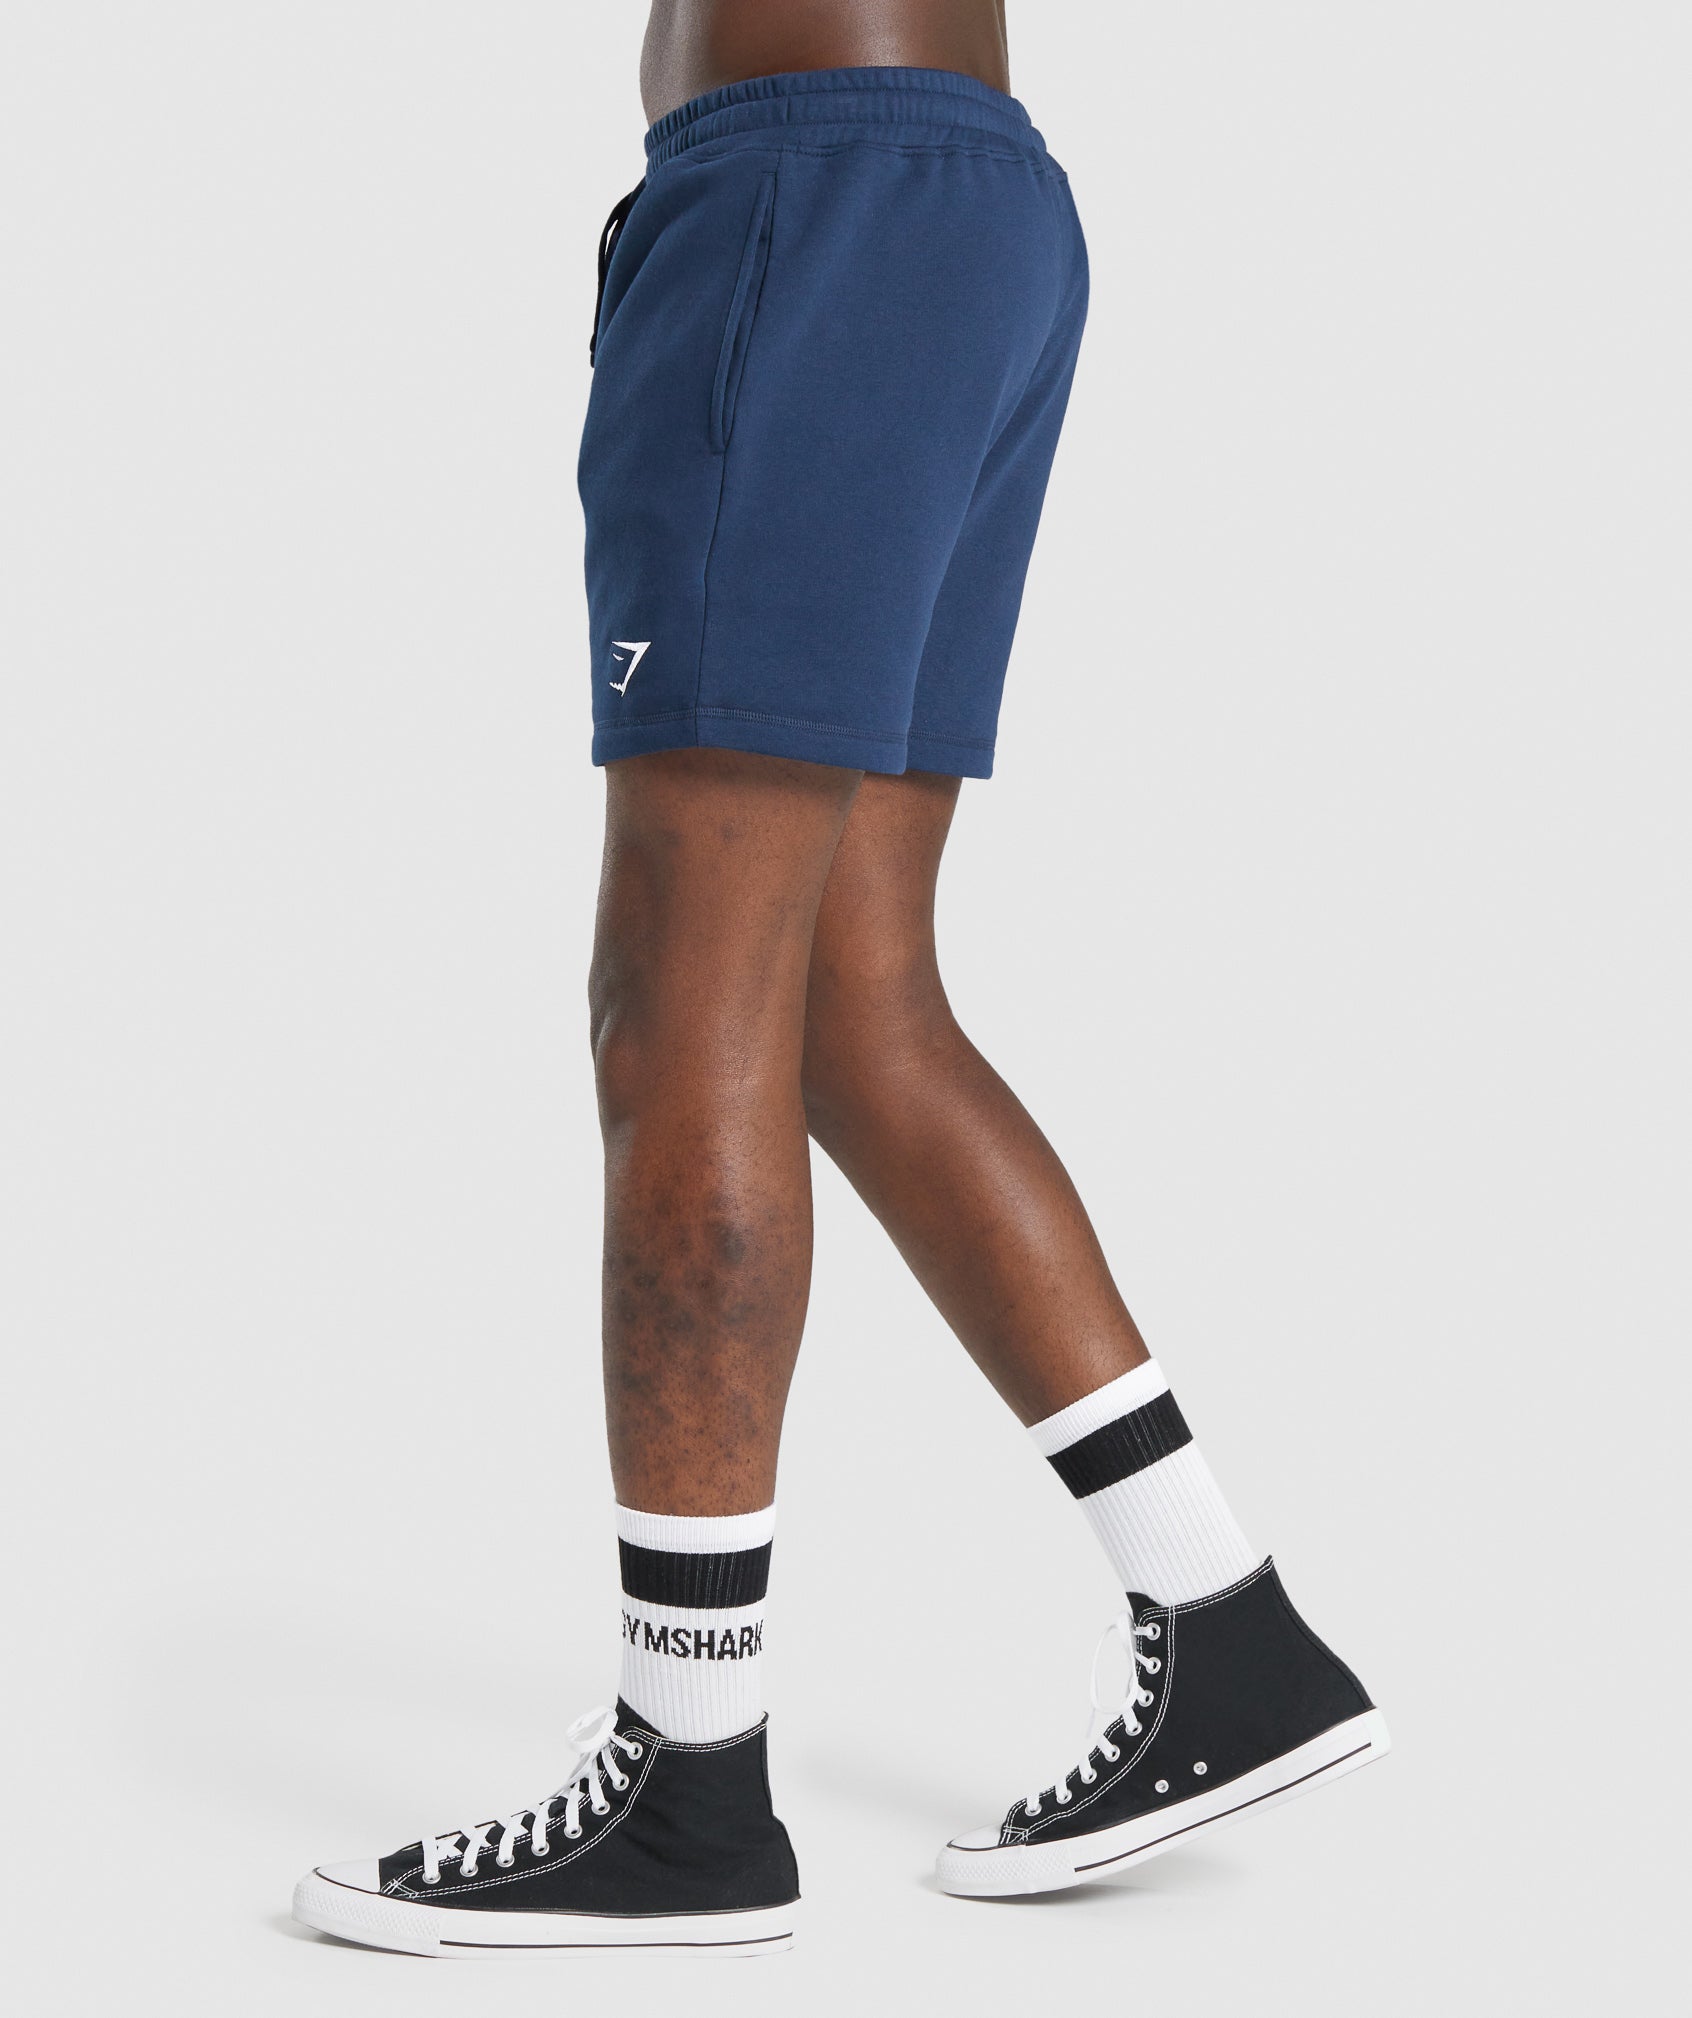 Gymshark Crest 7 Shorts - Terrace Blue